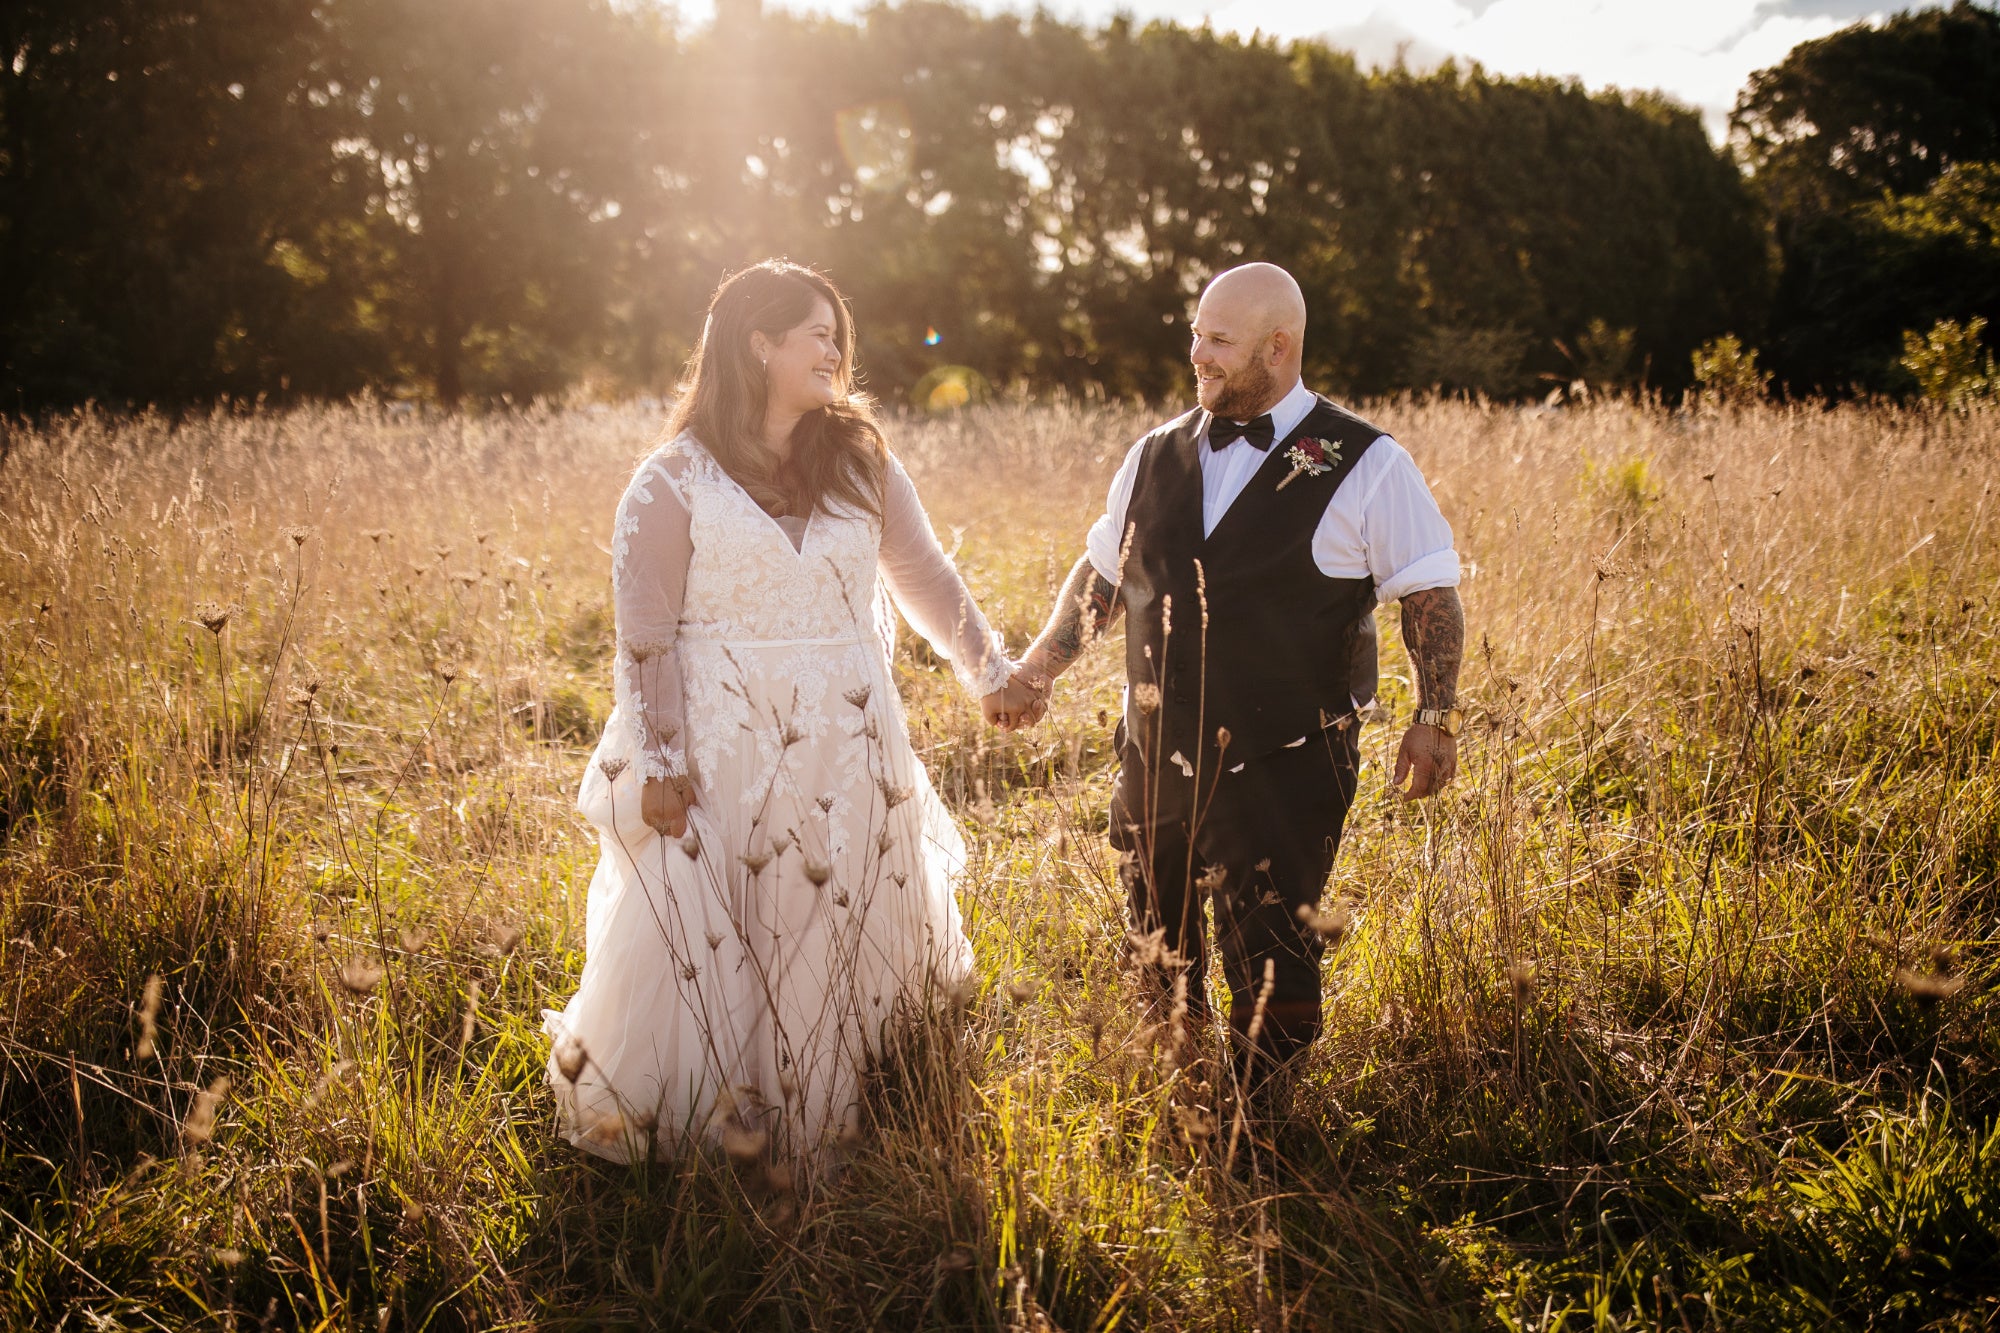 Carl and Elaine Wedding Golden hour at Markovina Vineyard Estate | The Paper Gazelle